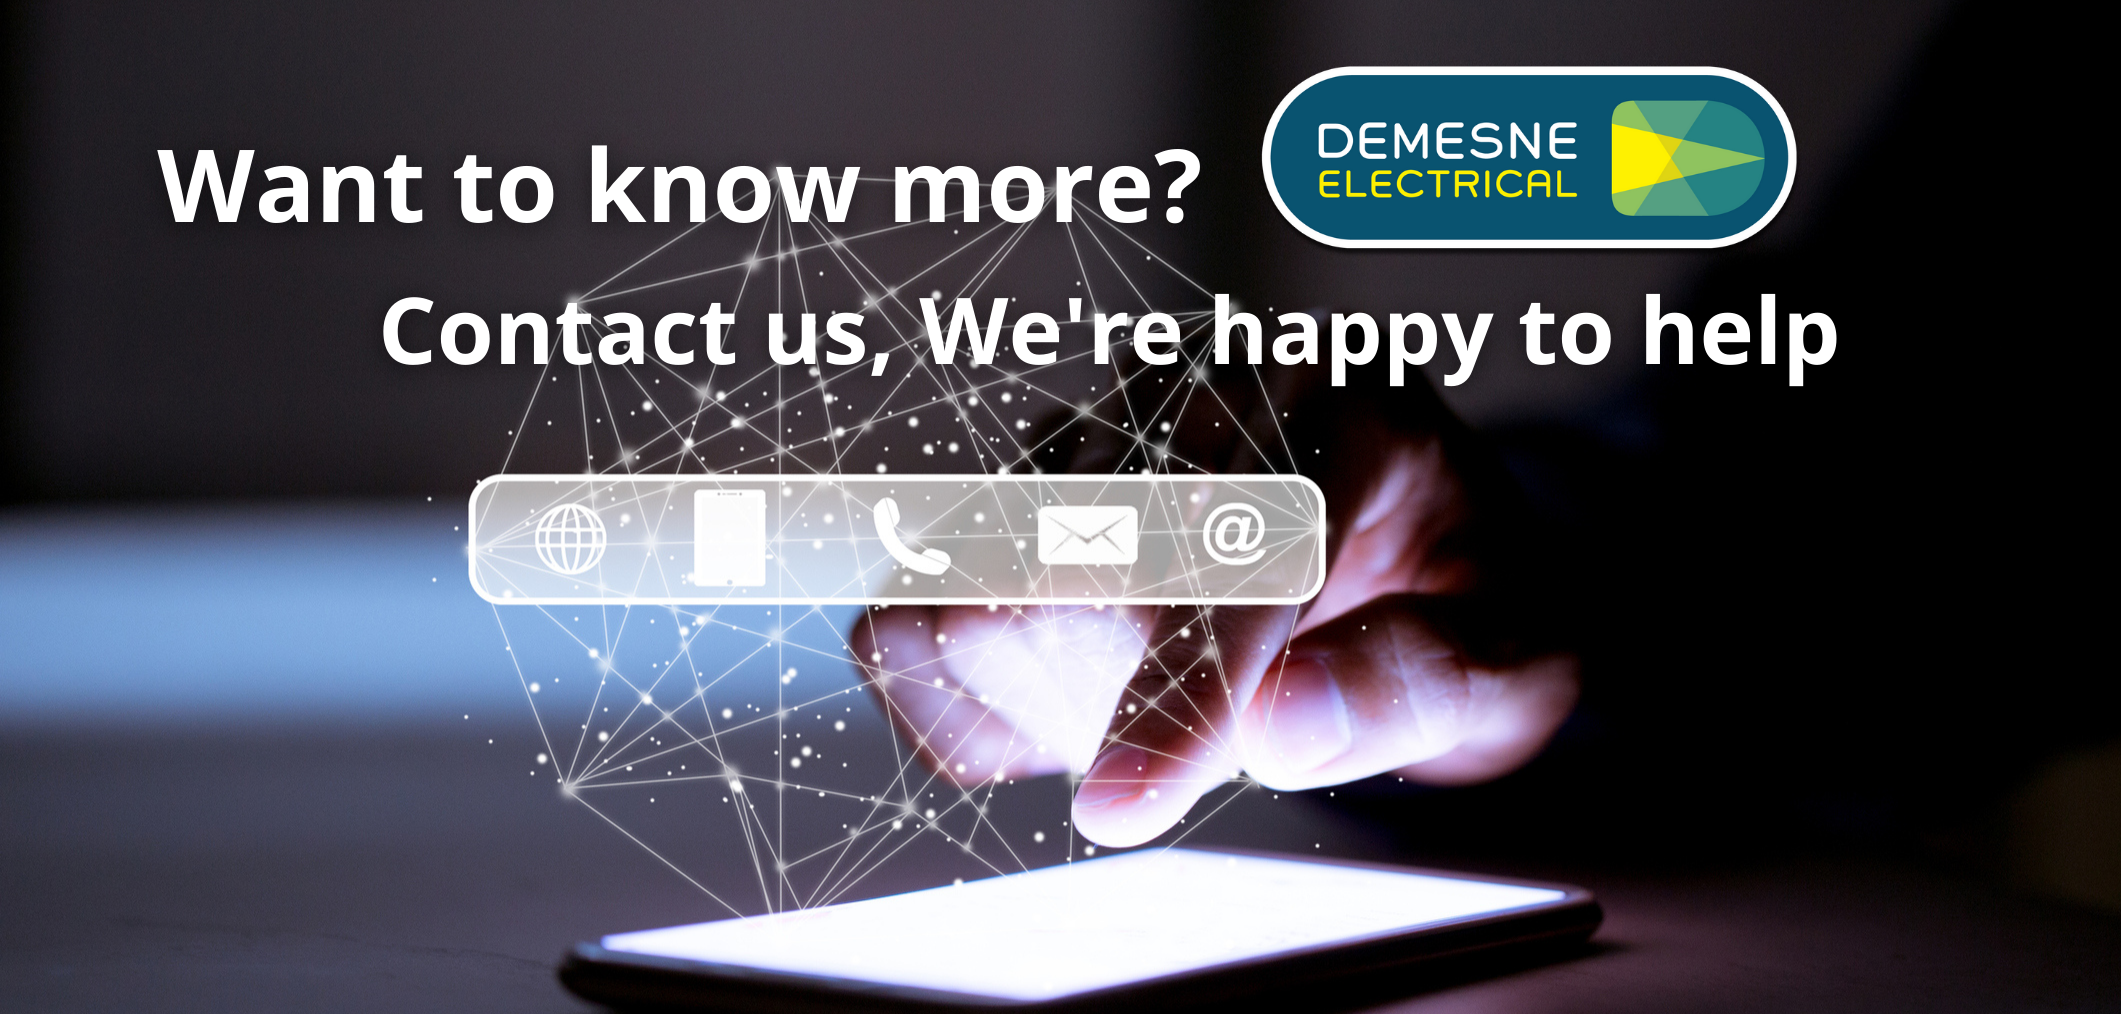 Demesne - Contact us